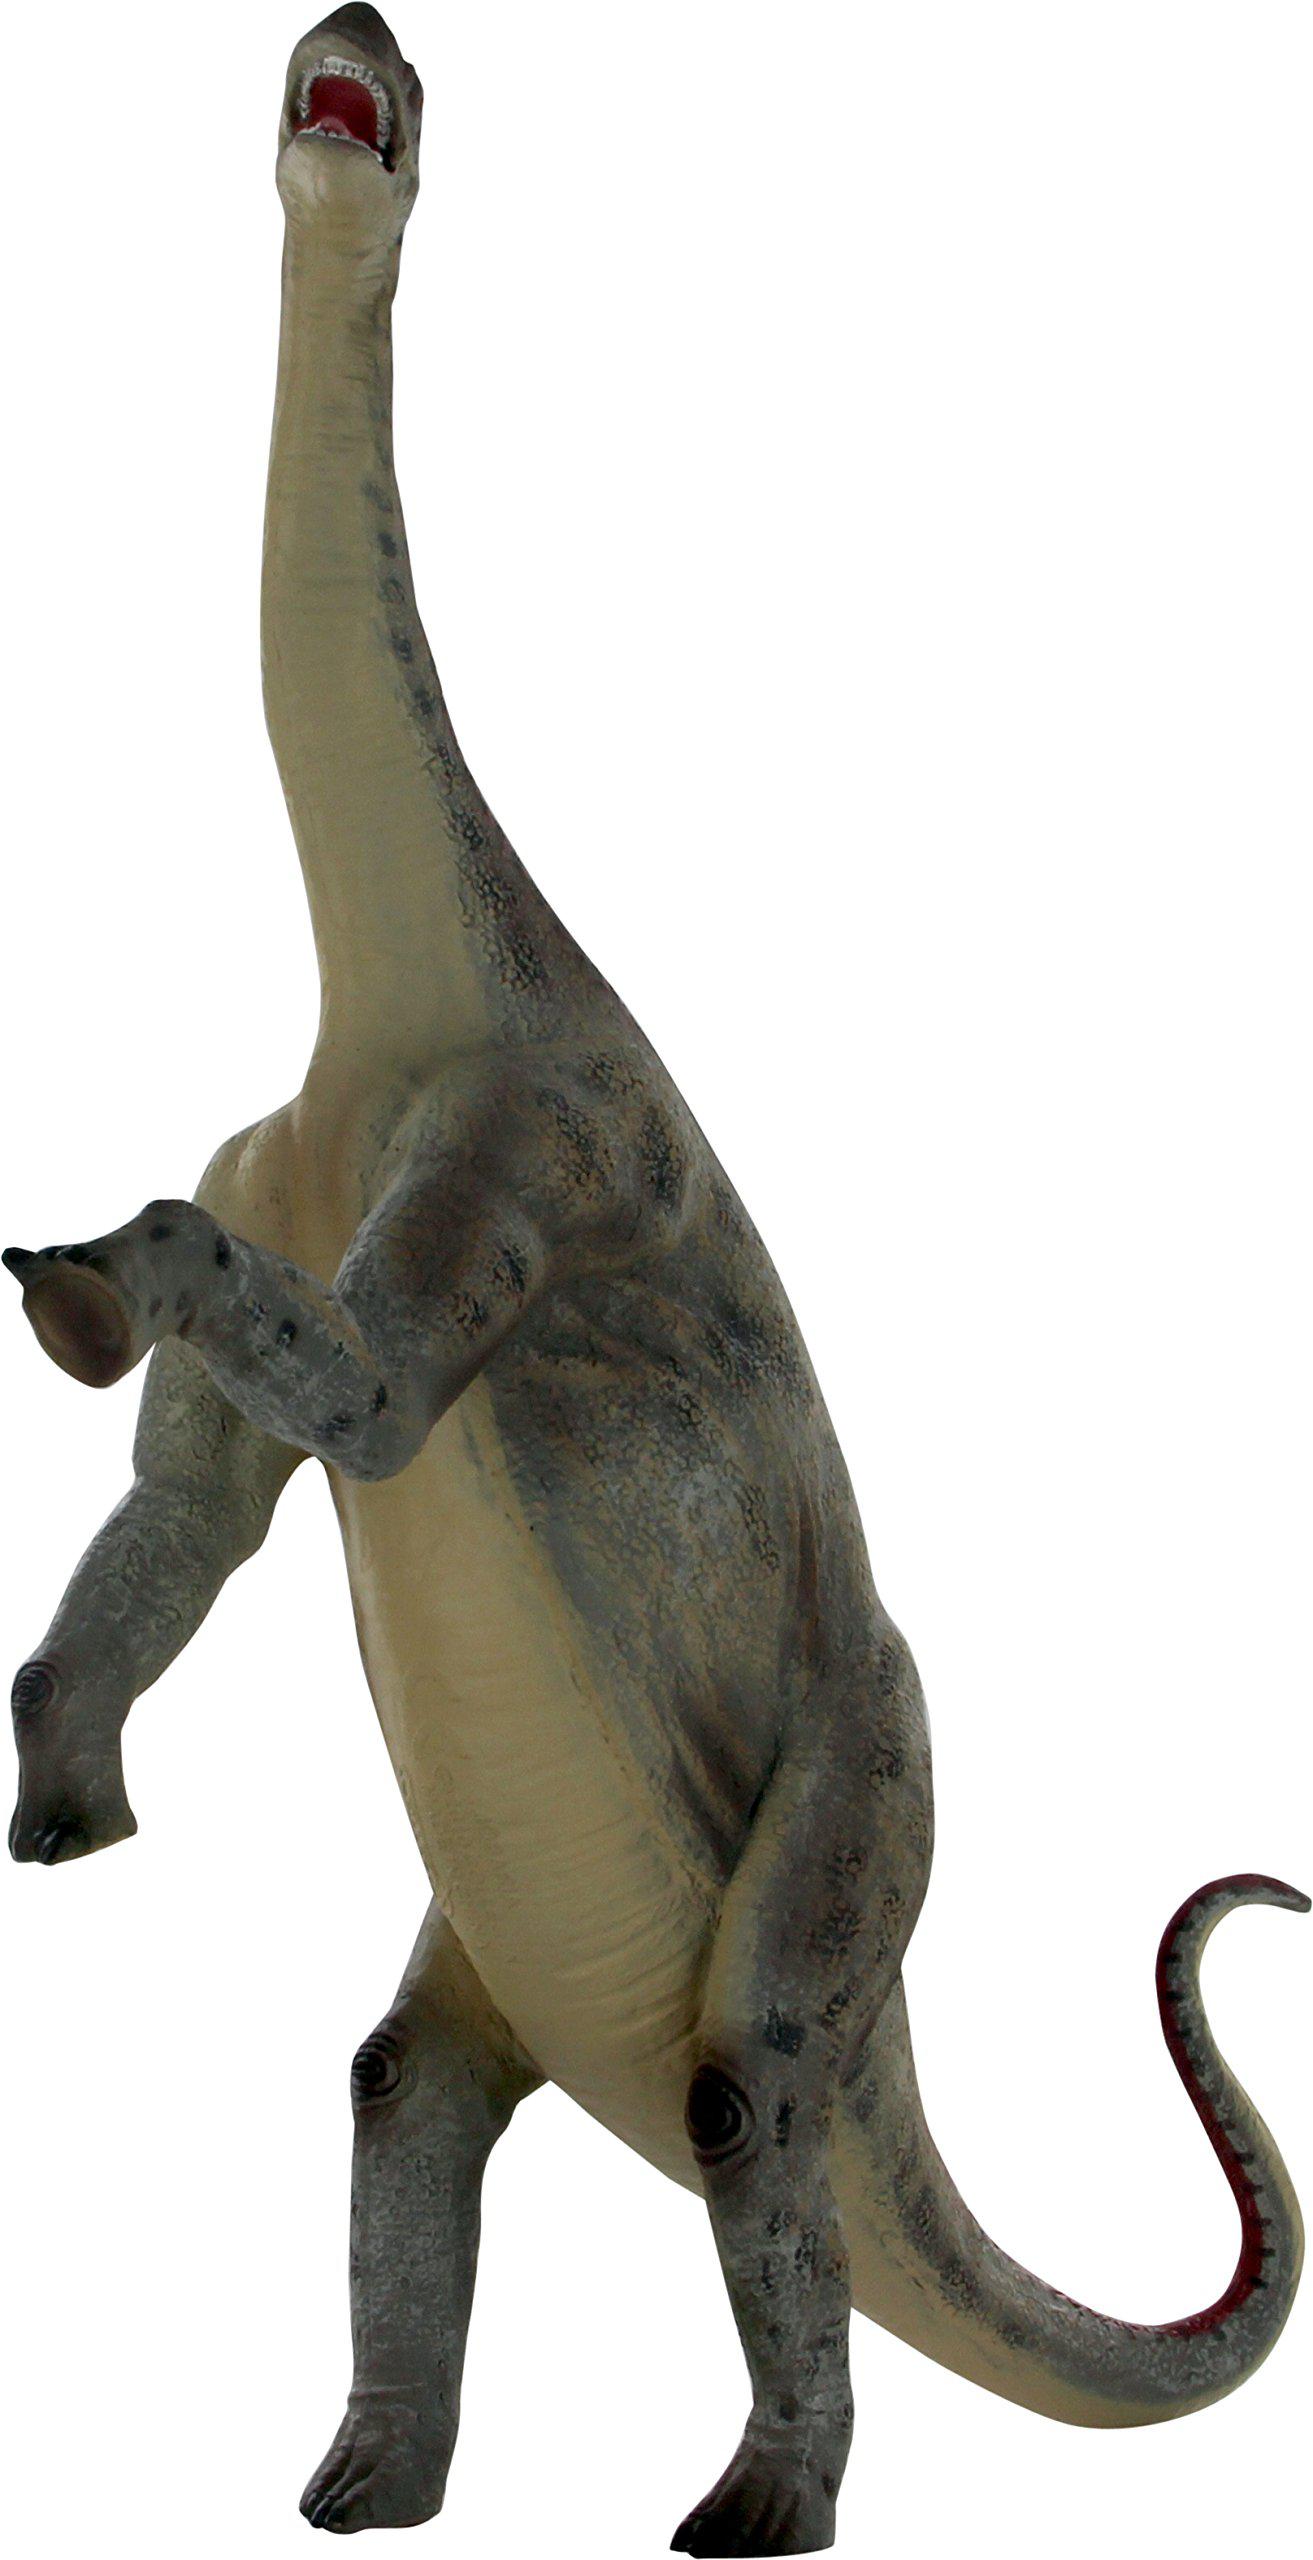 collecta prehistoric life jobaria deluxe (1:40 scale) vinyl toy dinosaur figure, 9.1"l x 11.6"h